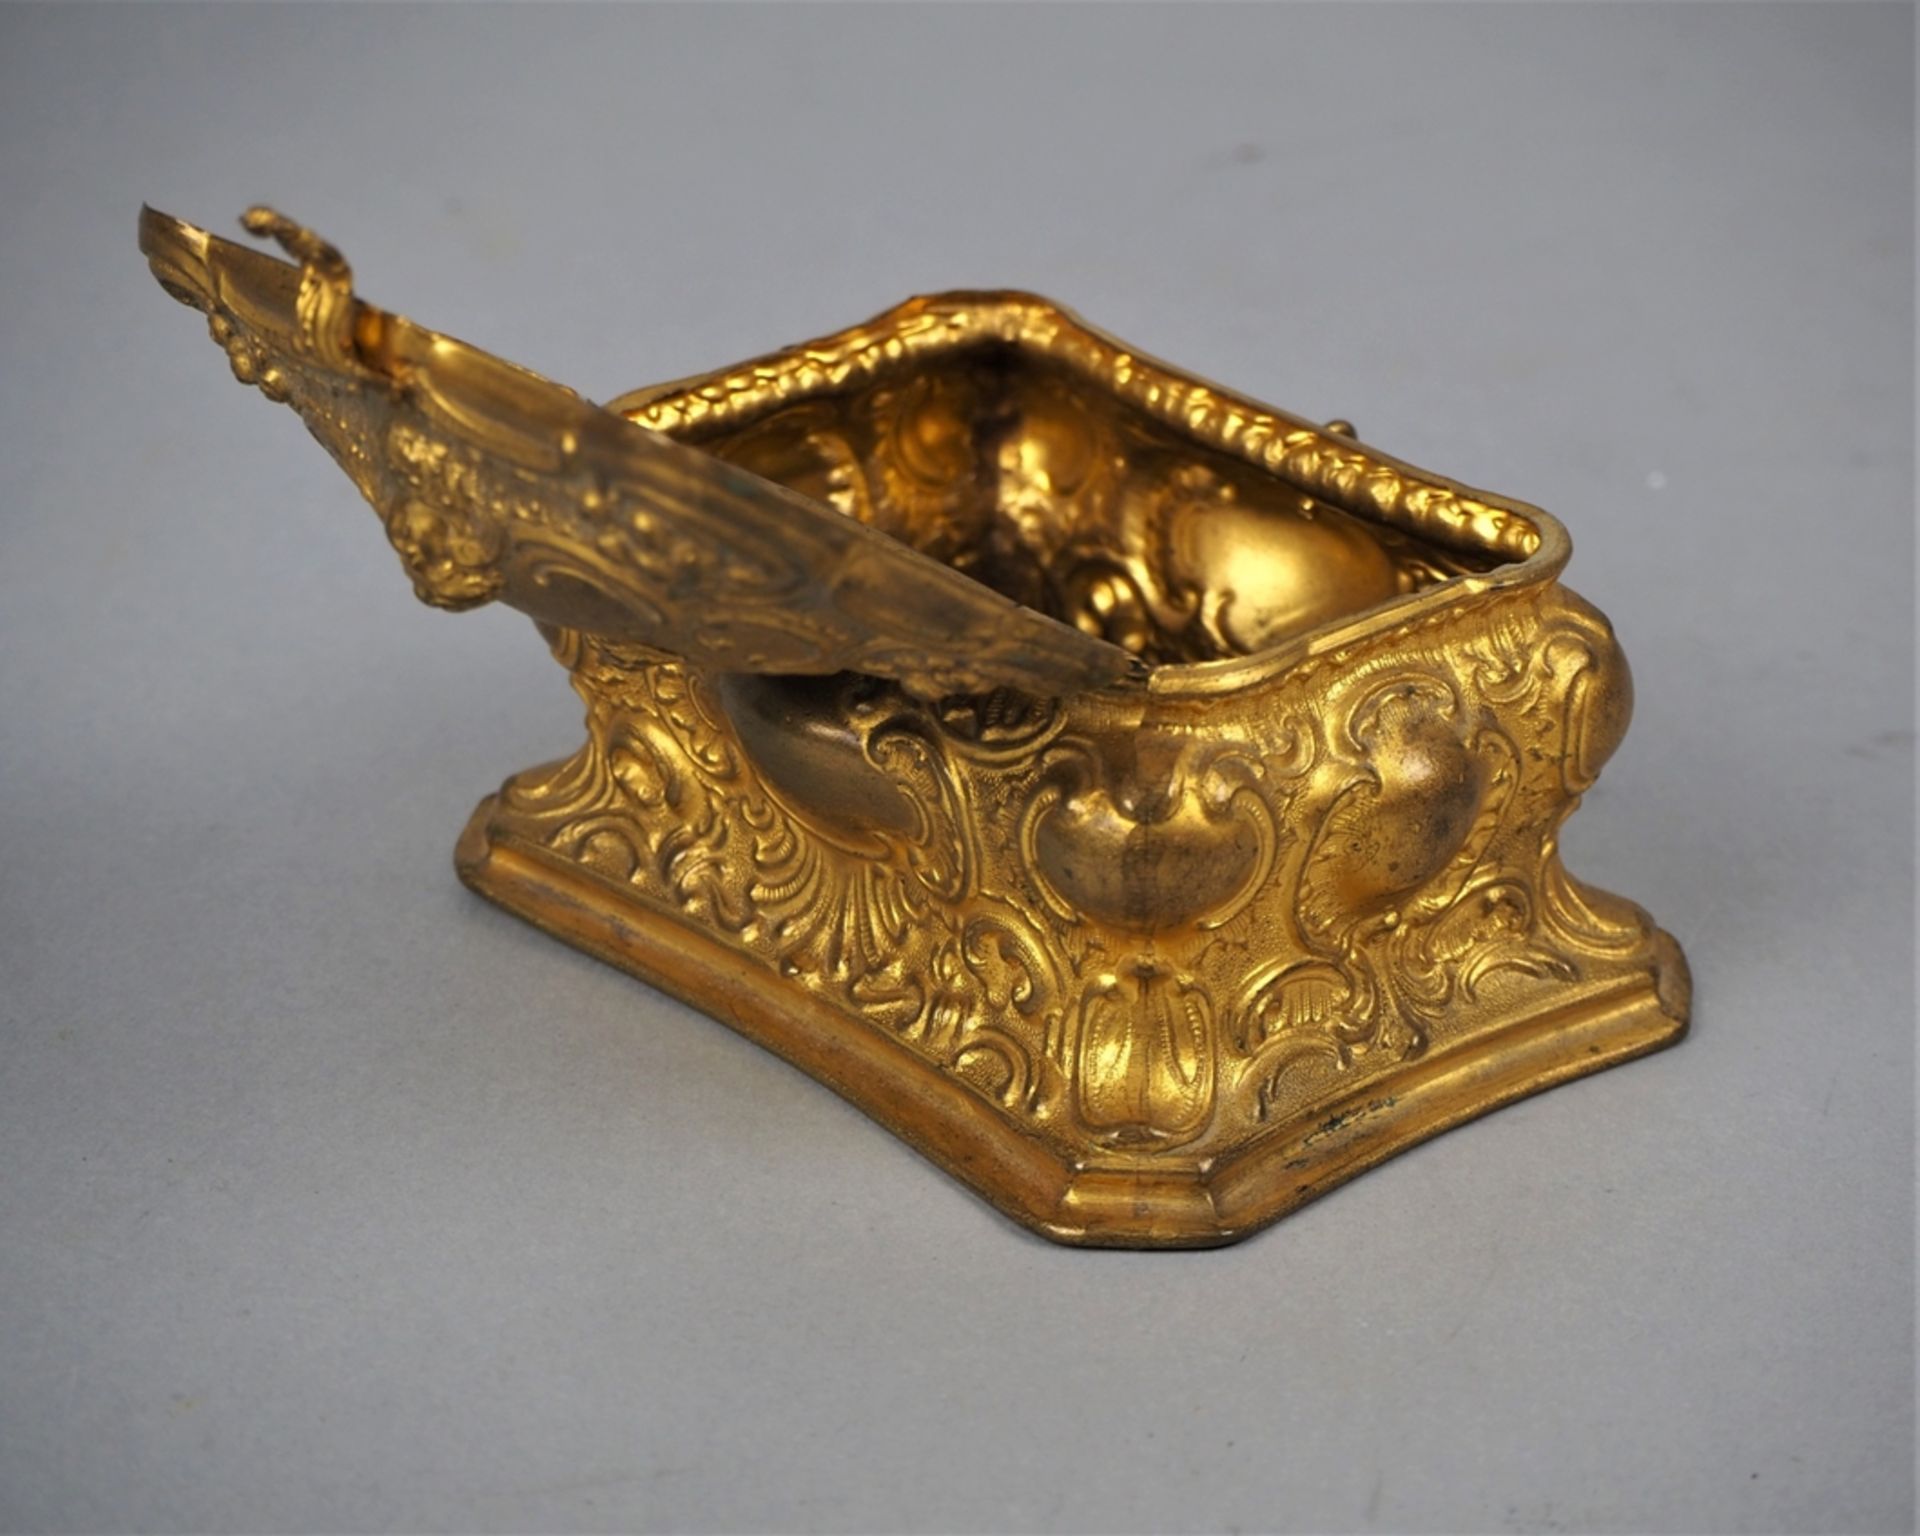 Art Nouveau brass money box, around 1890 - Image 2 of 3